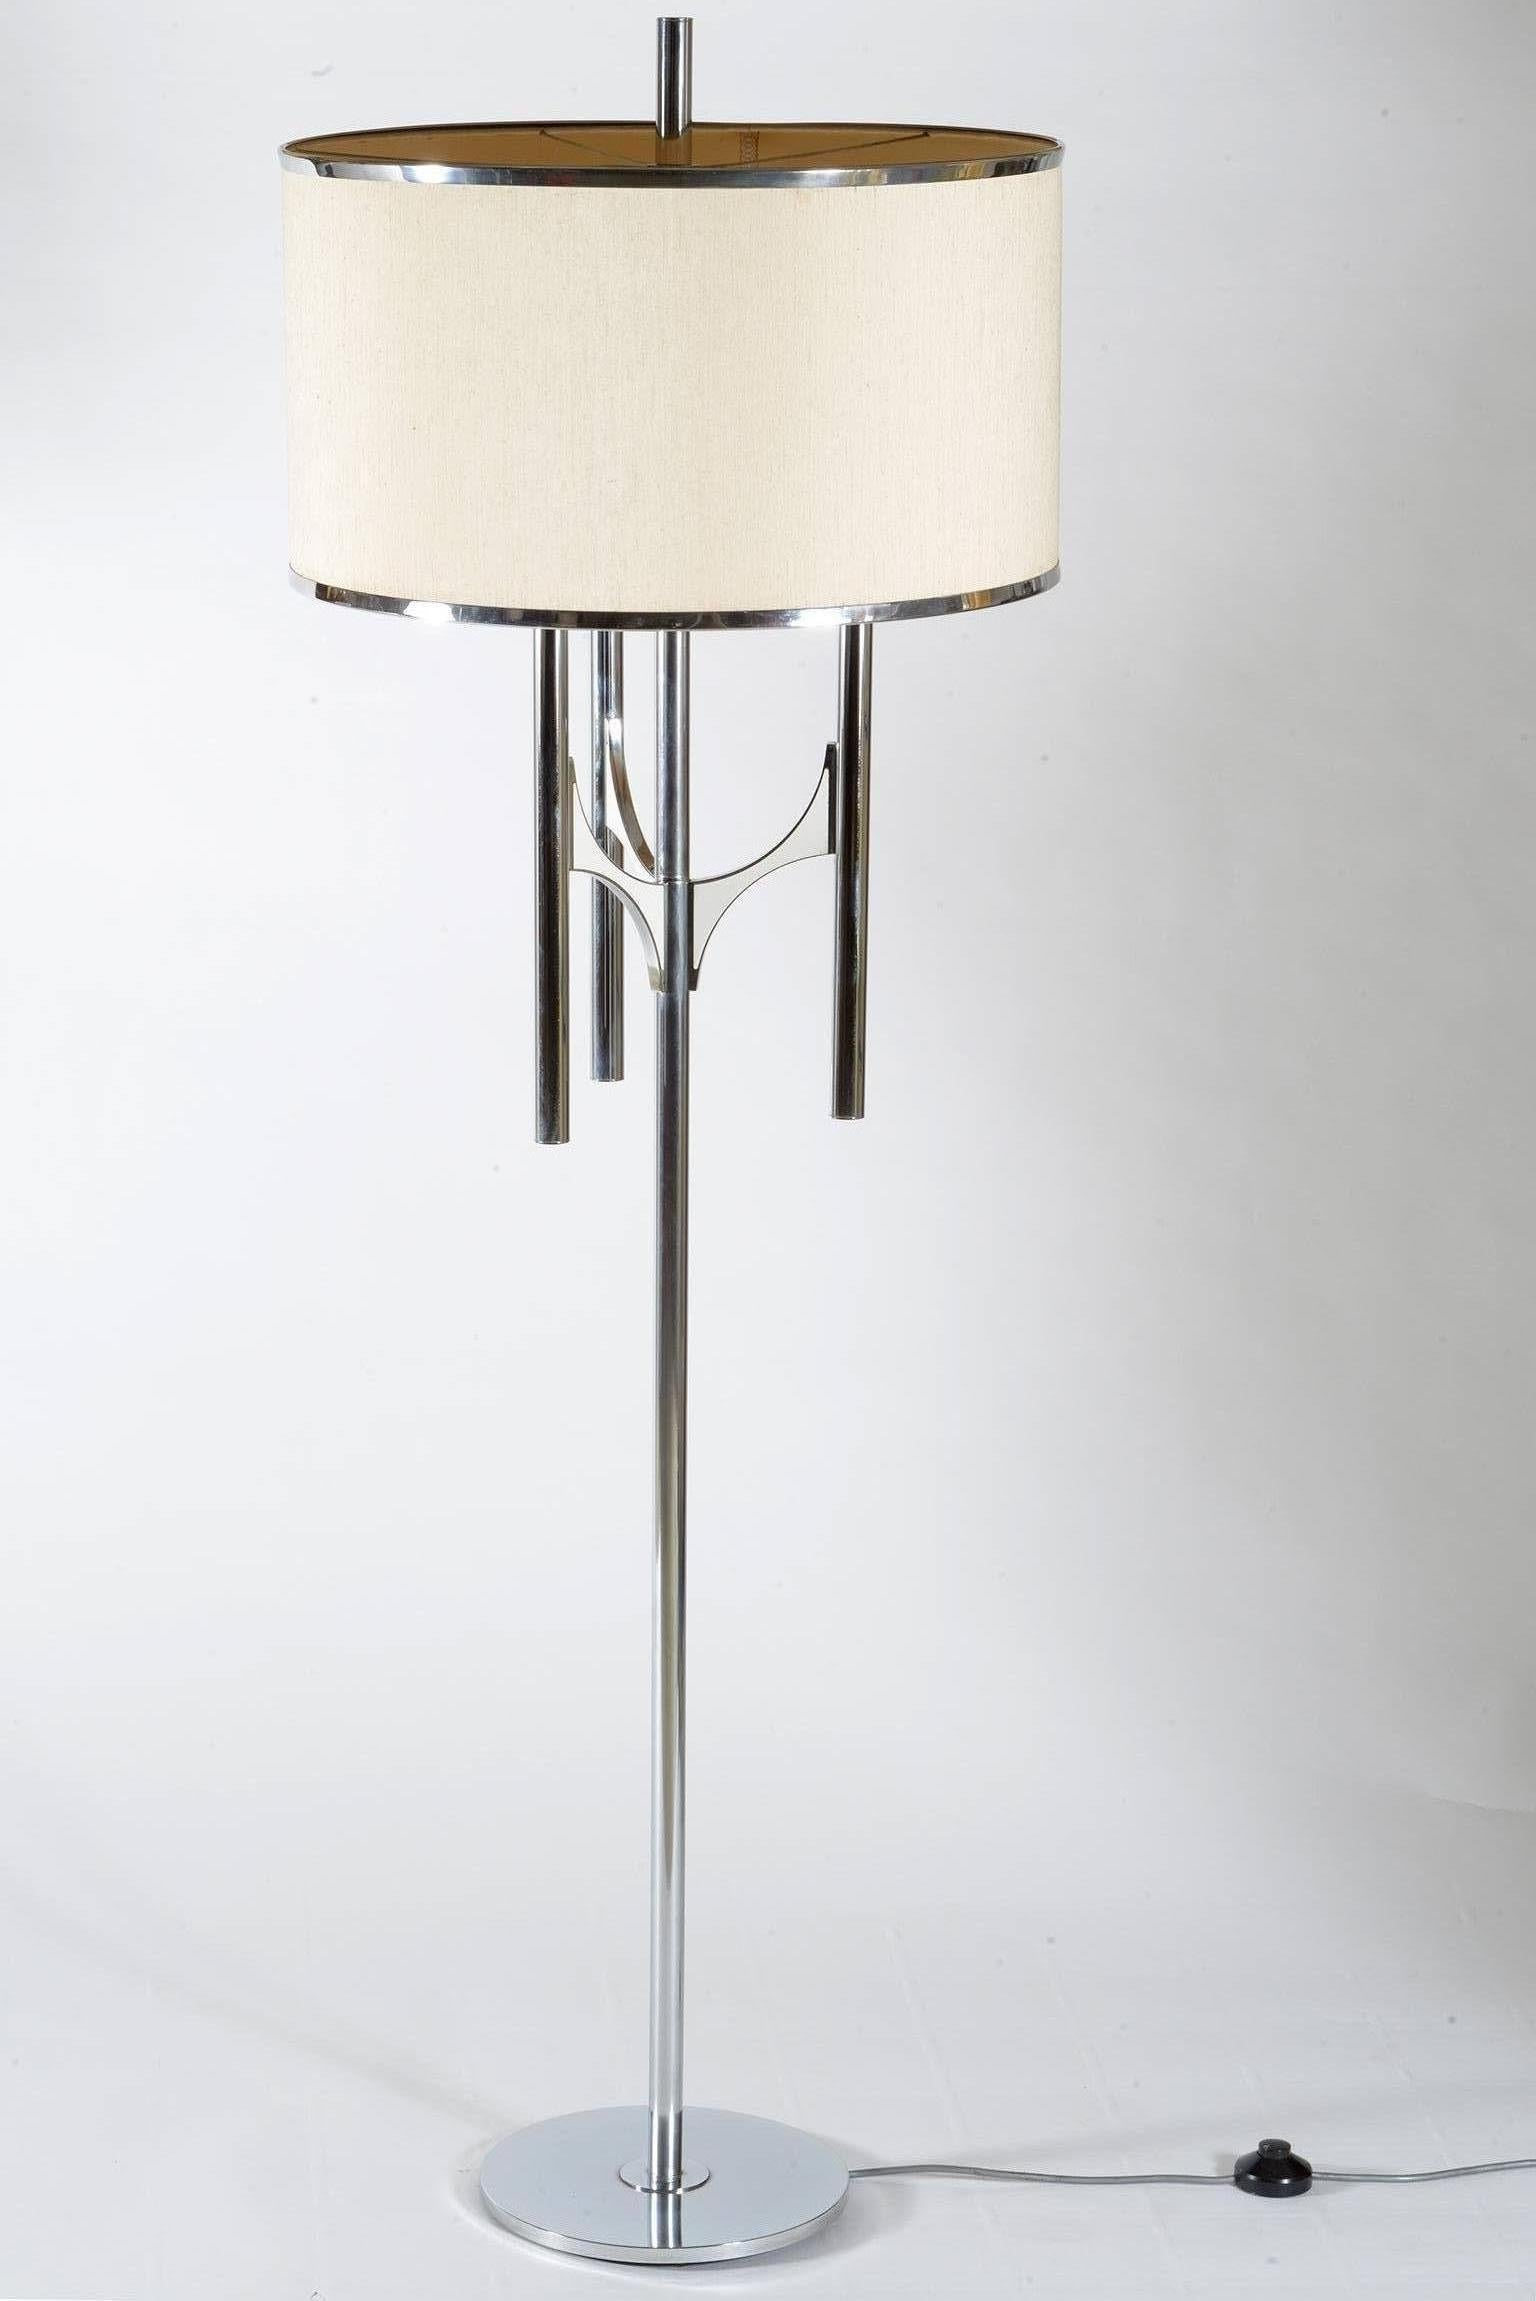 Midcentury Italian chrome metal floor lamp.
Original shade from the period.
Melted signature ‘Sciolari’ on the metal.
Three bulbs.
 